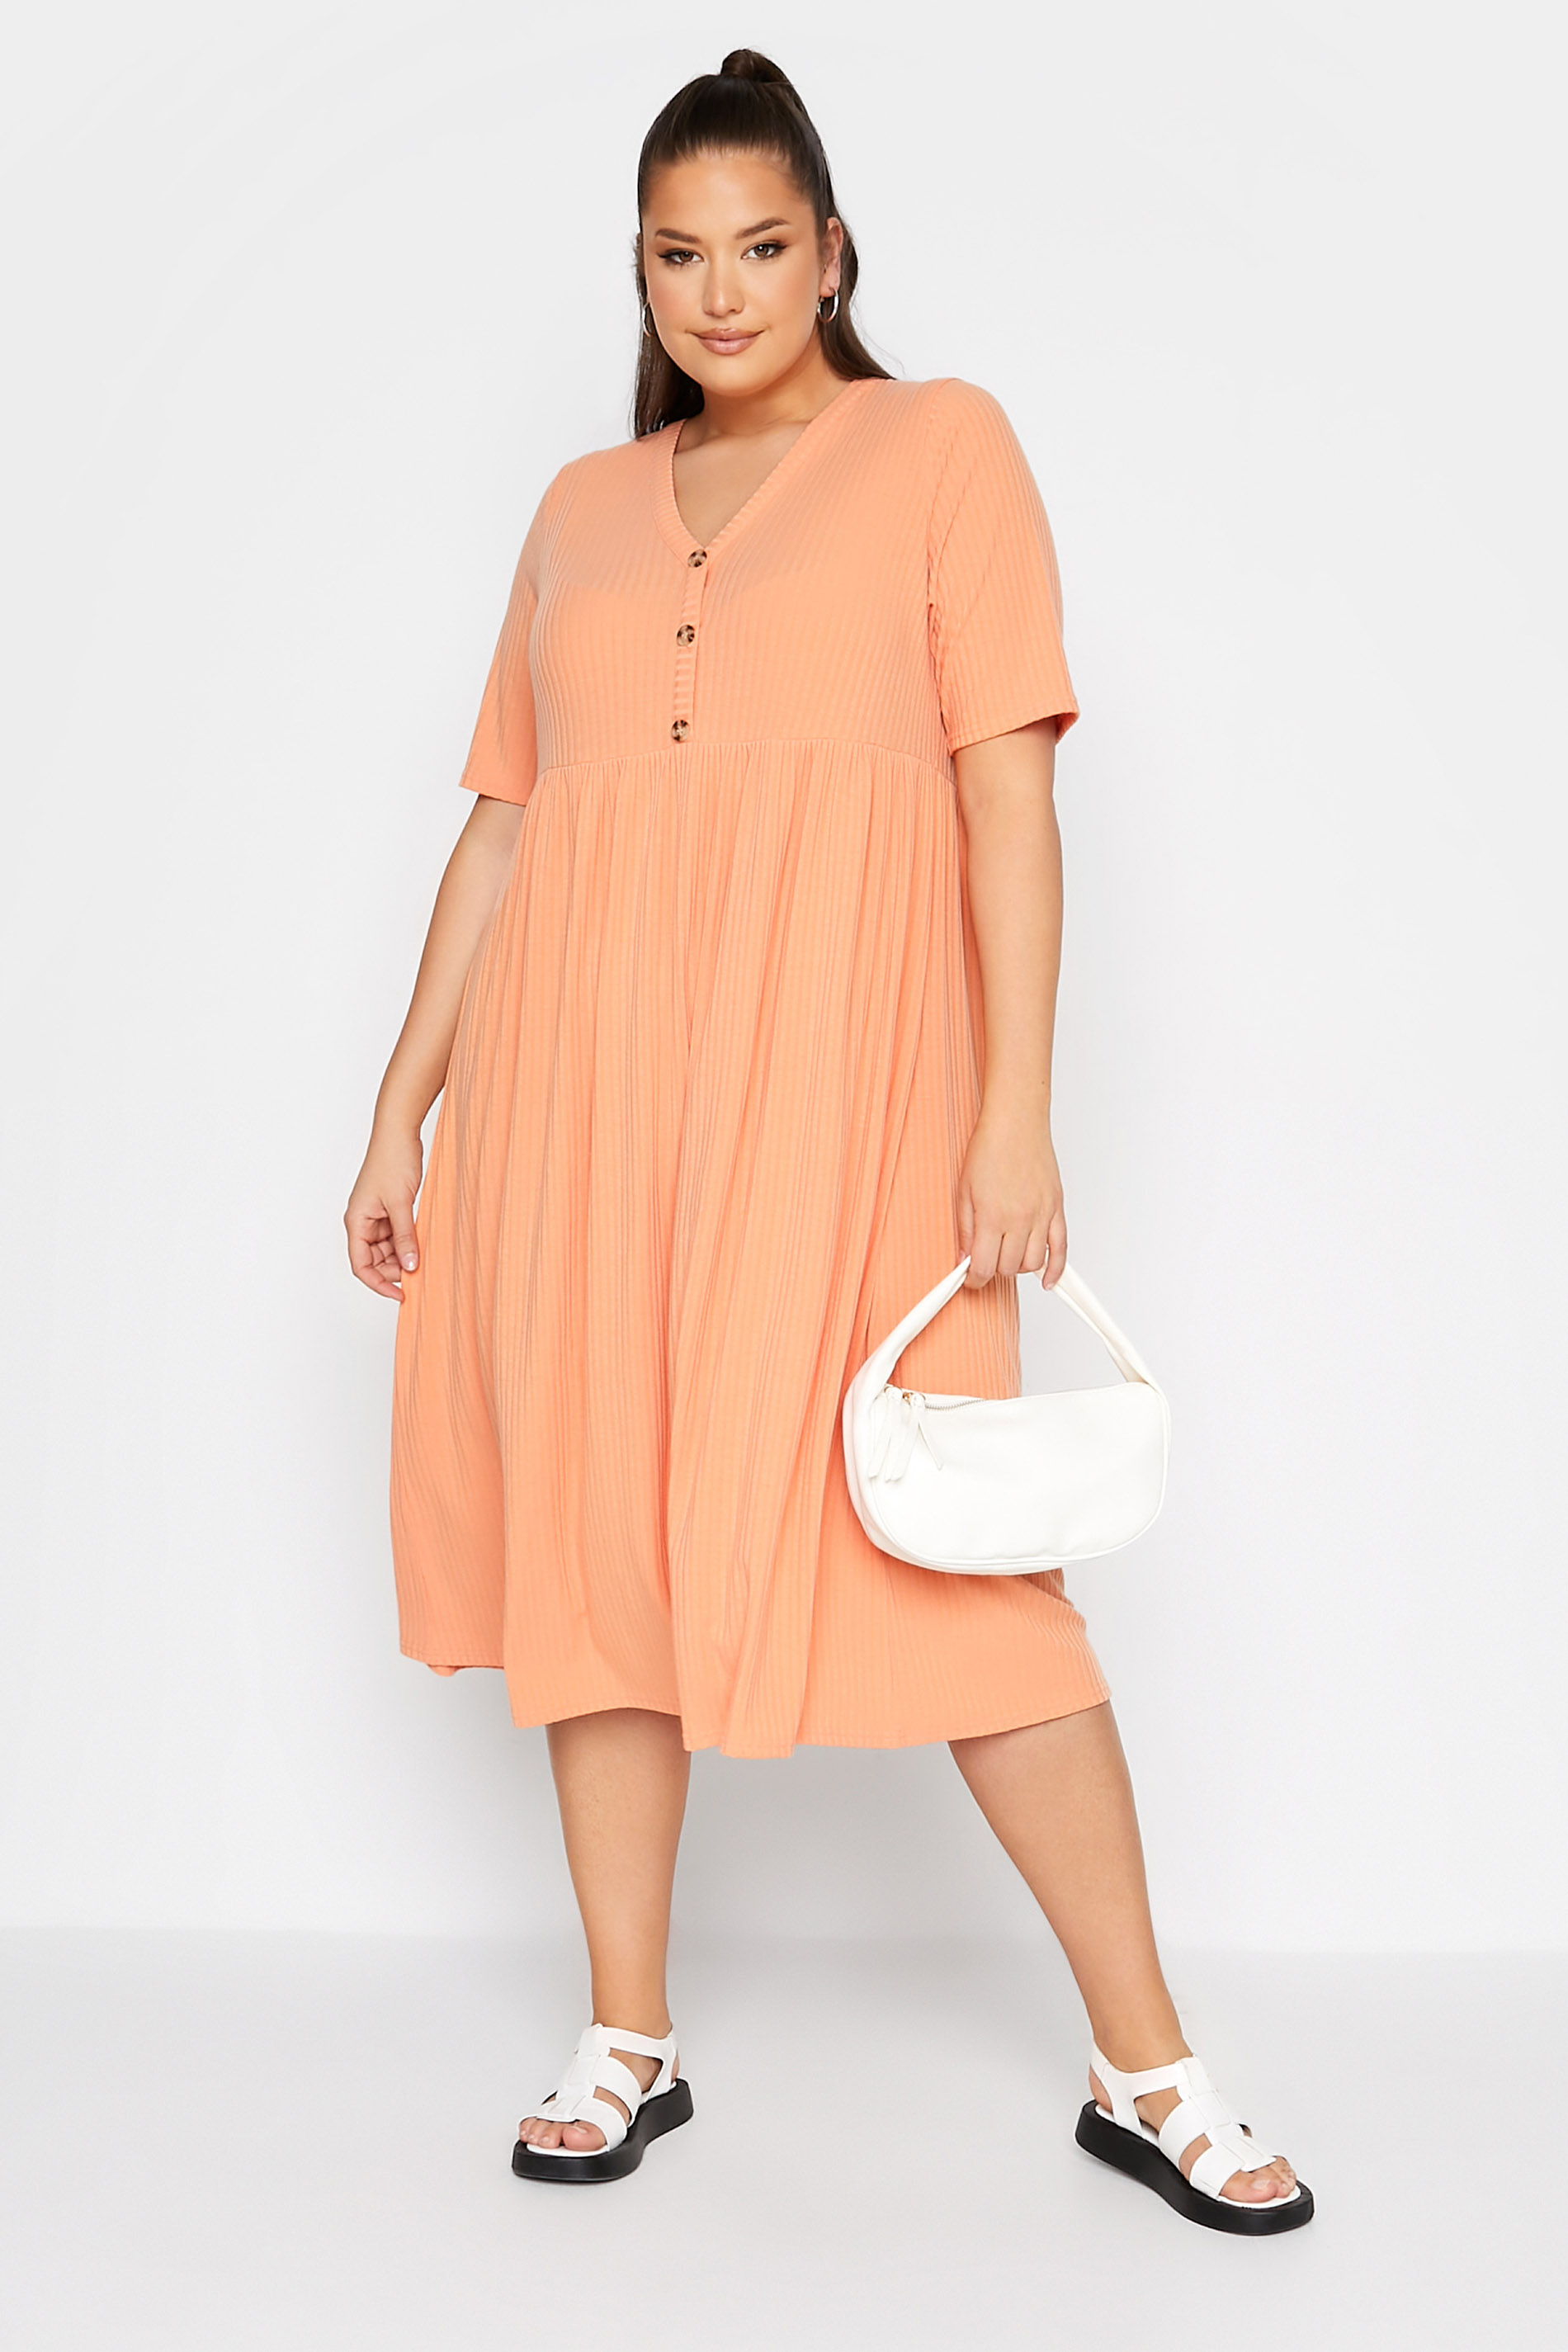 LIMITED COLLECTION Plus Size Light Orange Ribbed Peplum Midi Dress | Yours Clothing  1